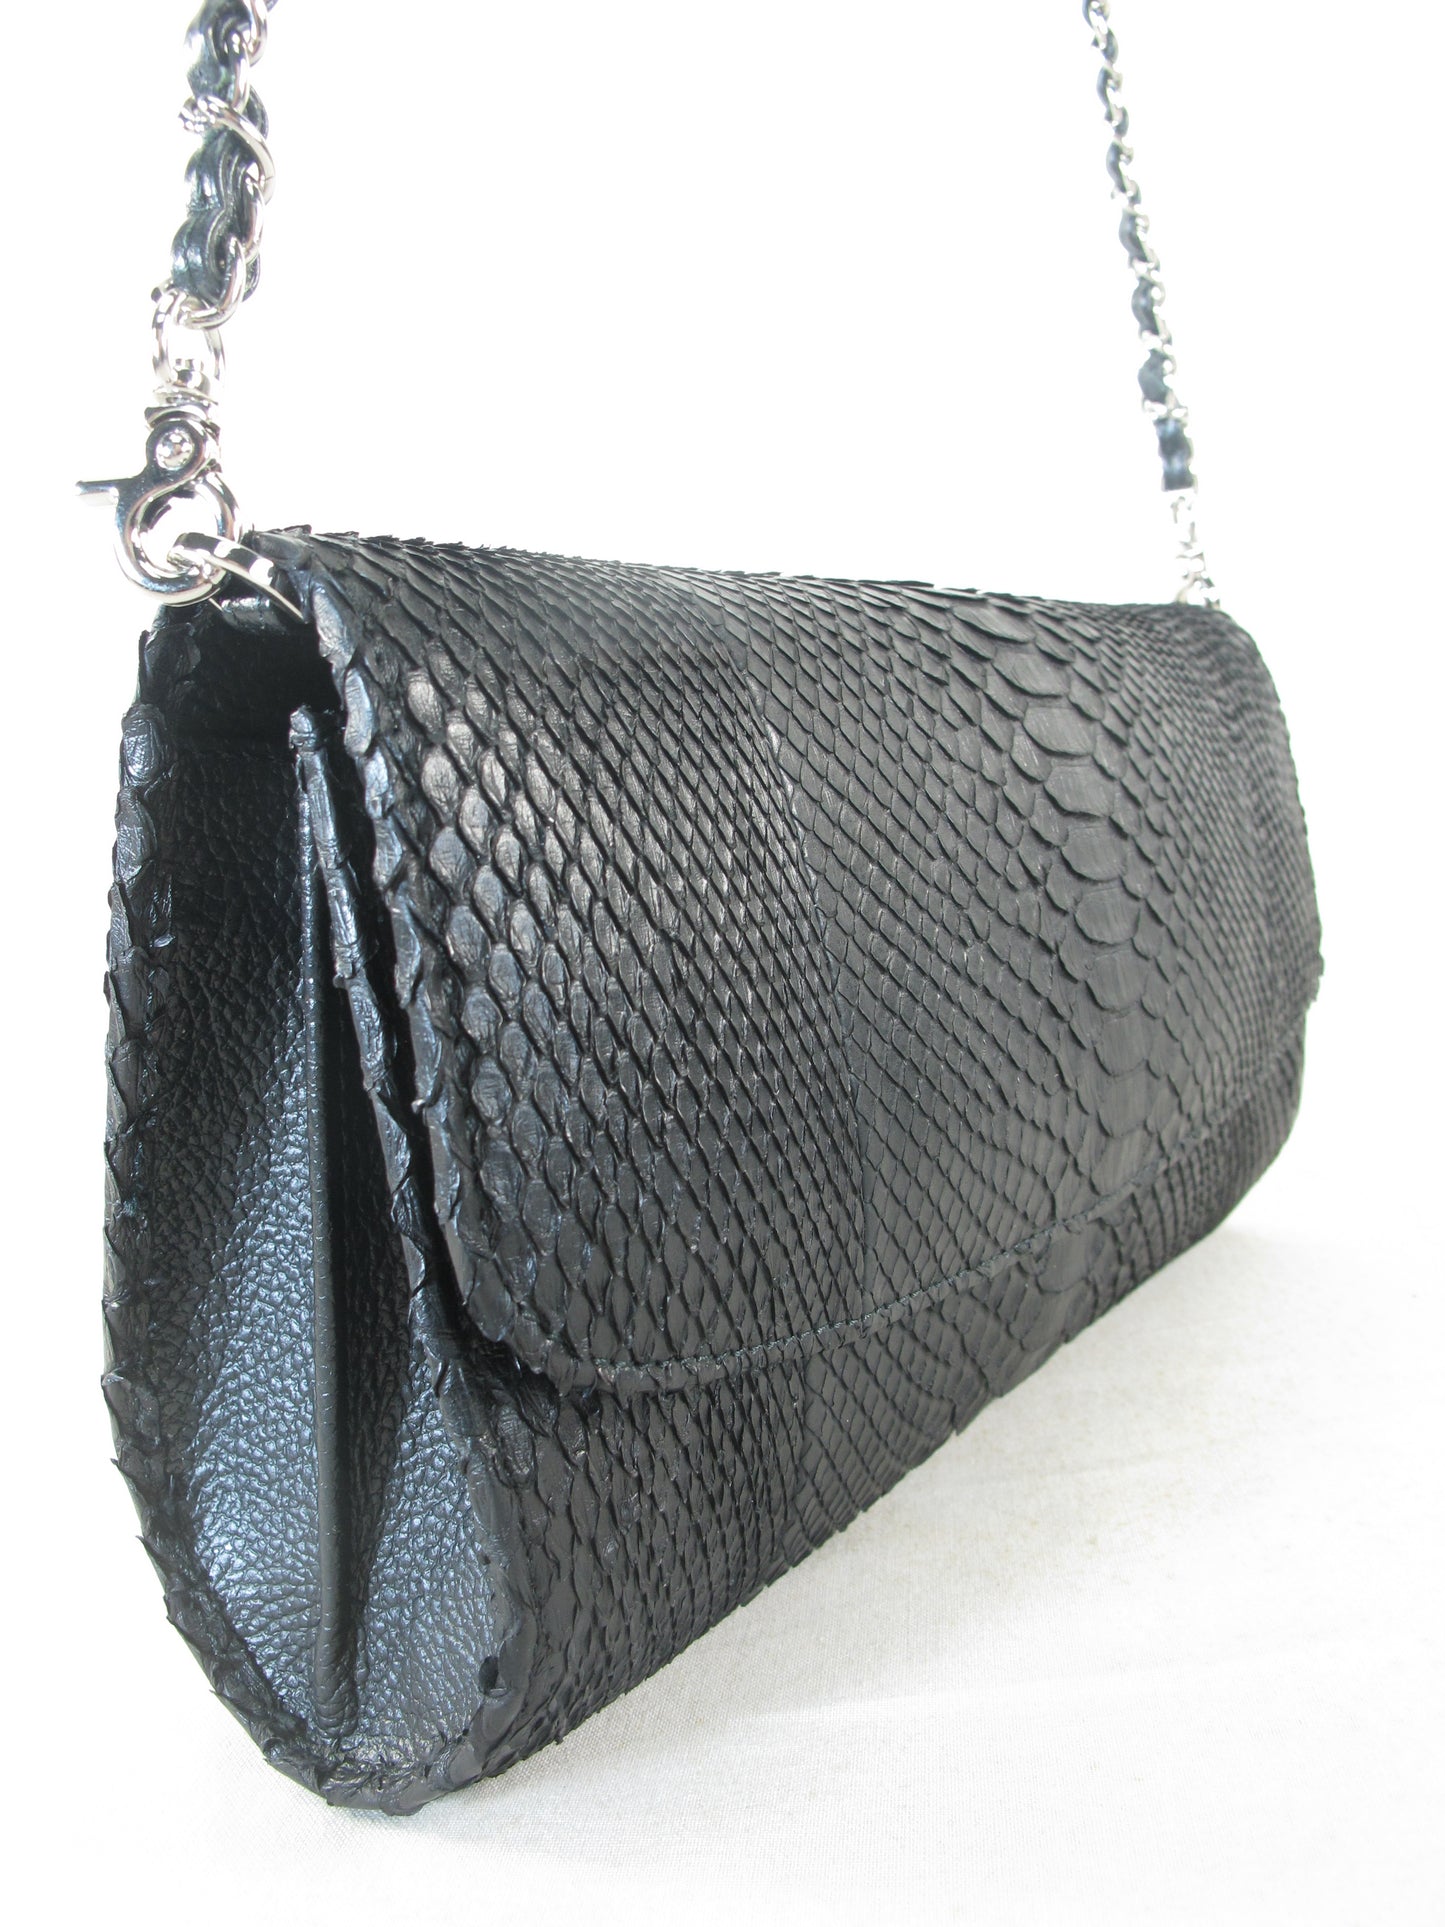 PELGIO Genuine Python Skin Leather Women's Messenger Bag Crossbody Purse